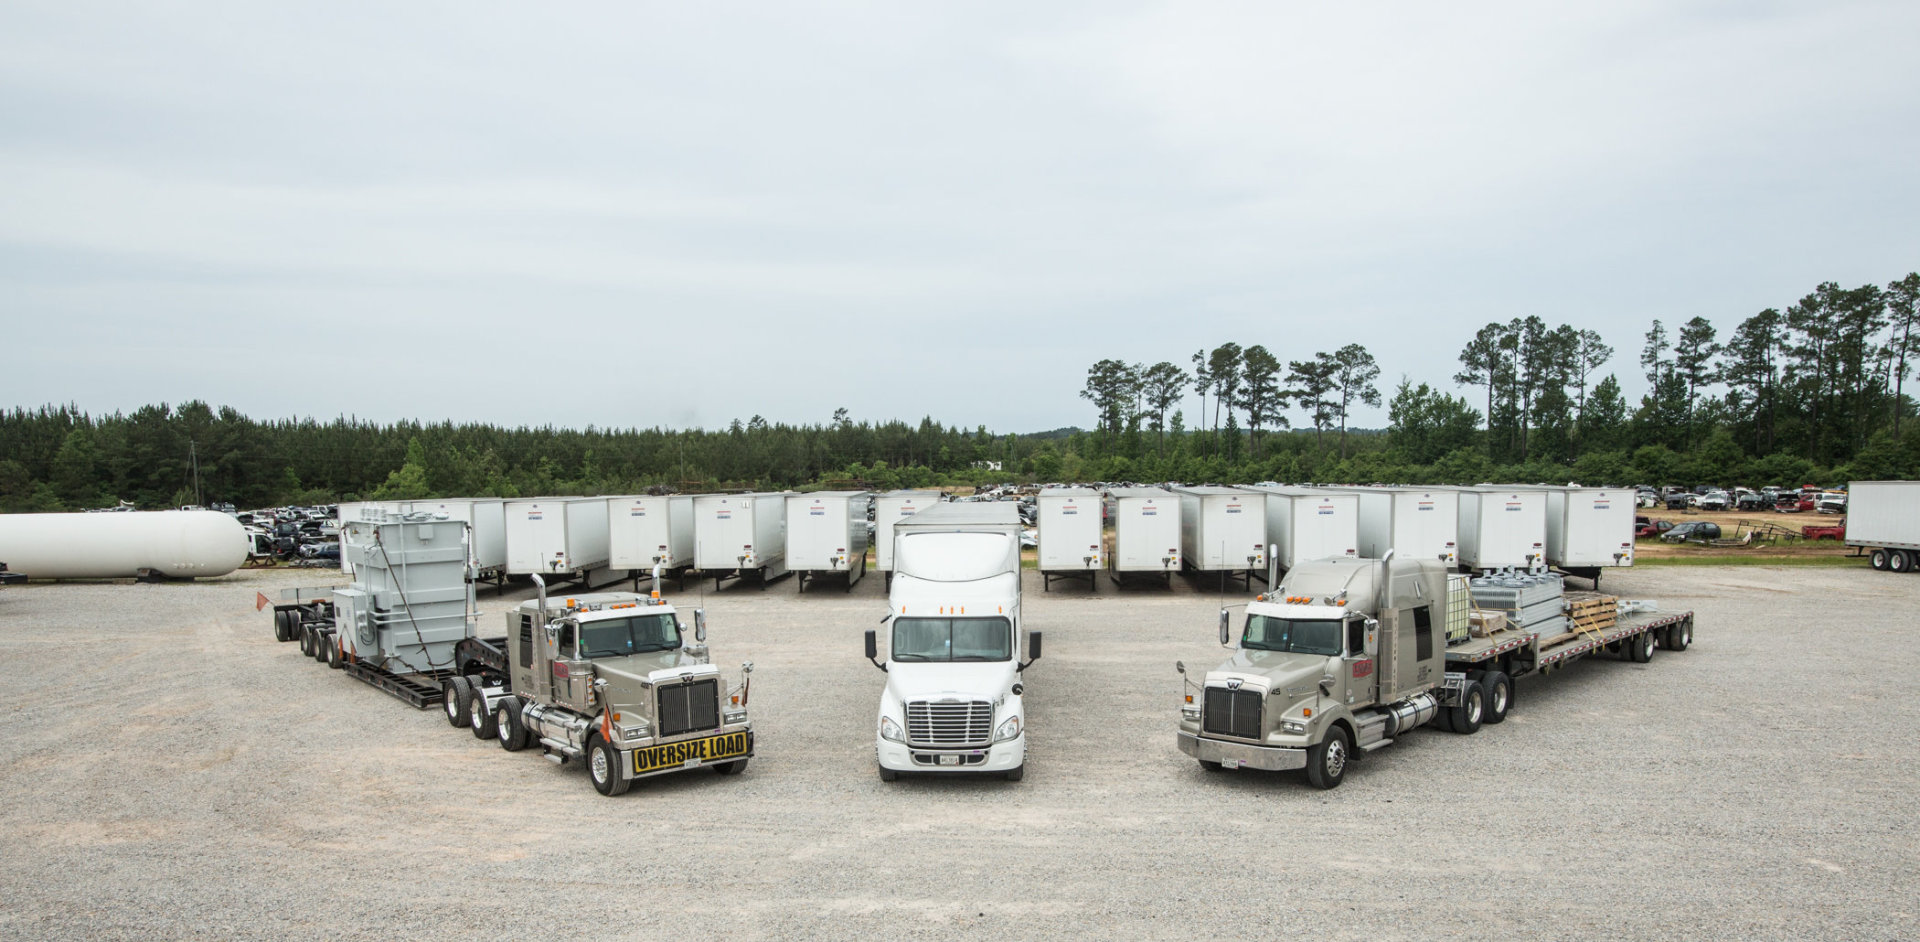 Fleet of heavy haul transport vehicles and equipment from Parish Transport, heavy haul transport and heavy haul shipping company